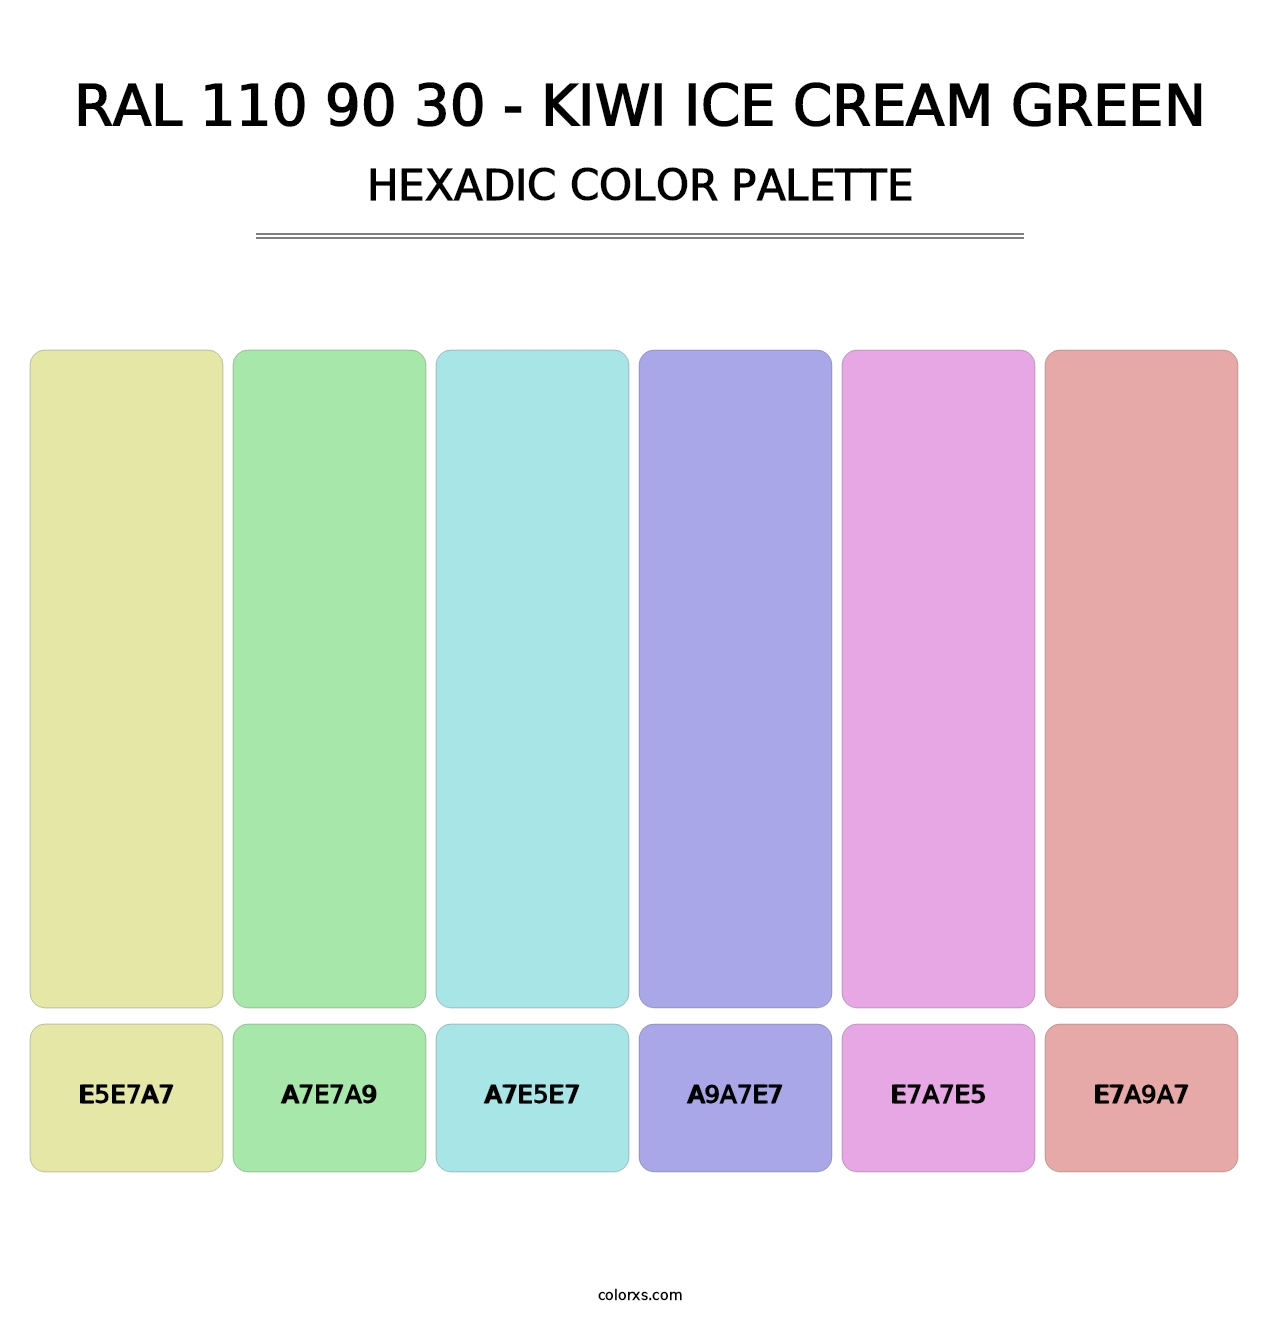 RAL 110 90 30 - Kiwi Ice Cream Green - Hexadic Color Palette